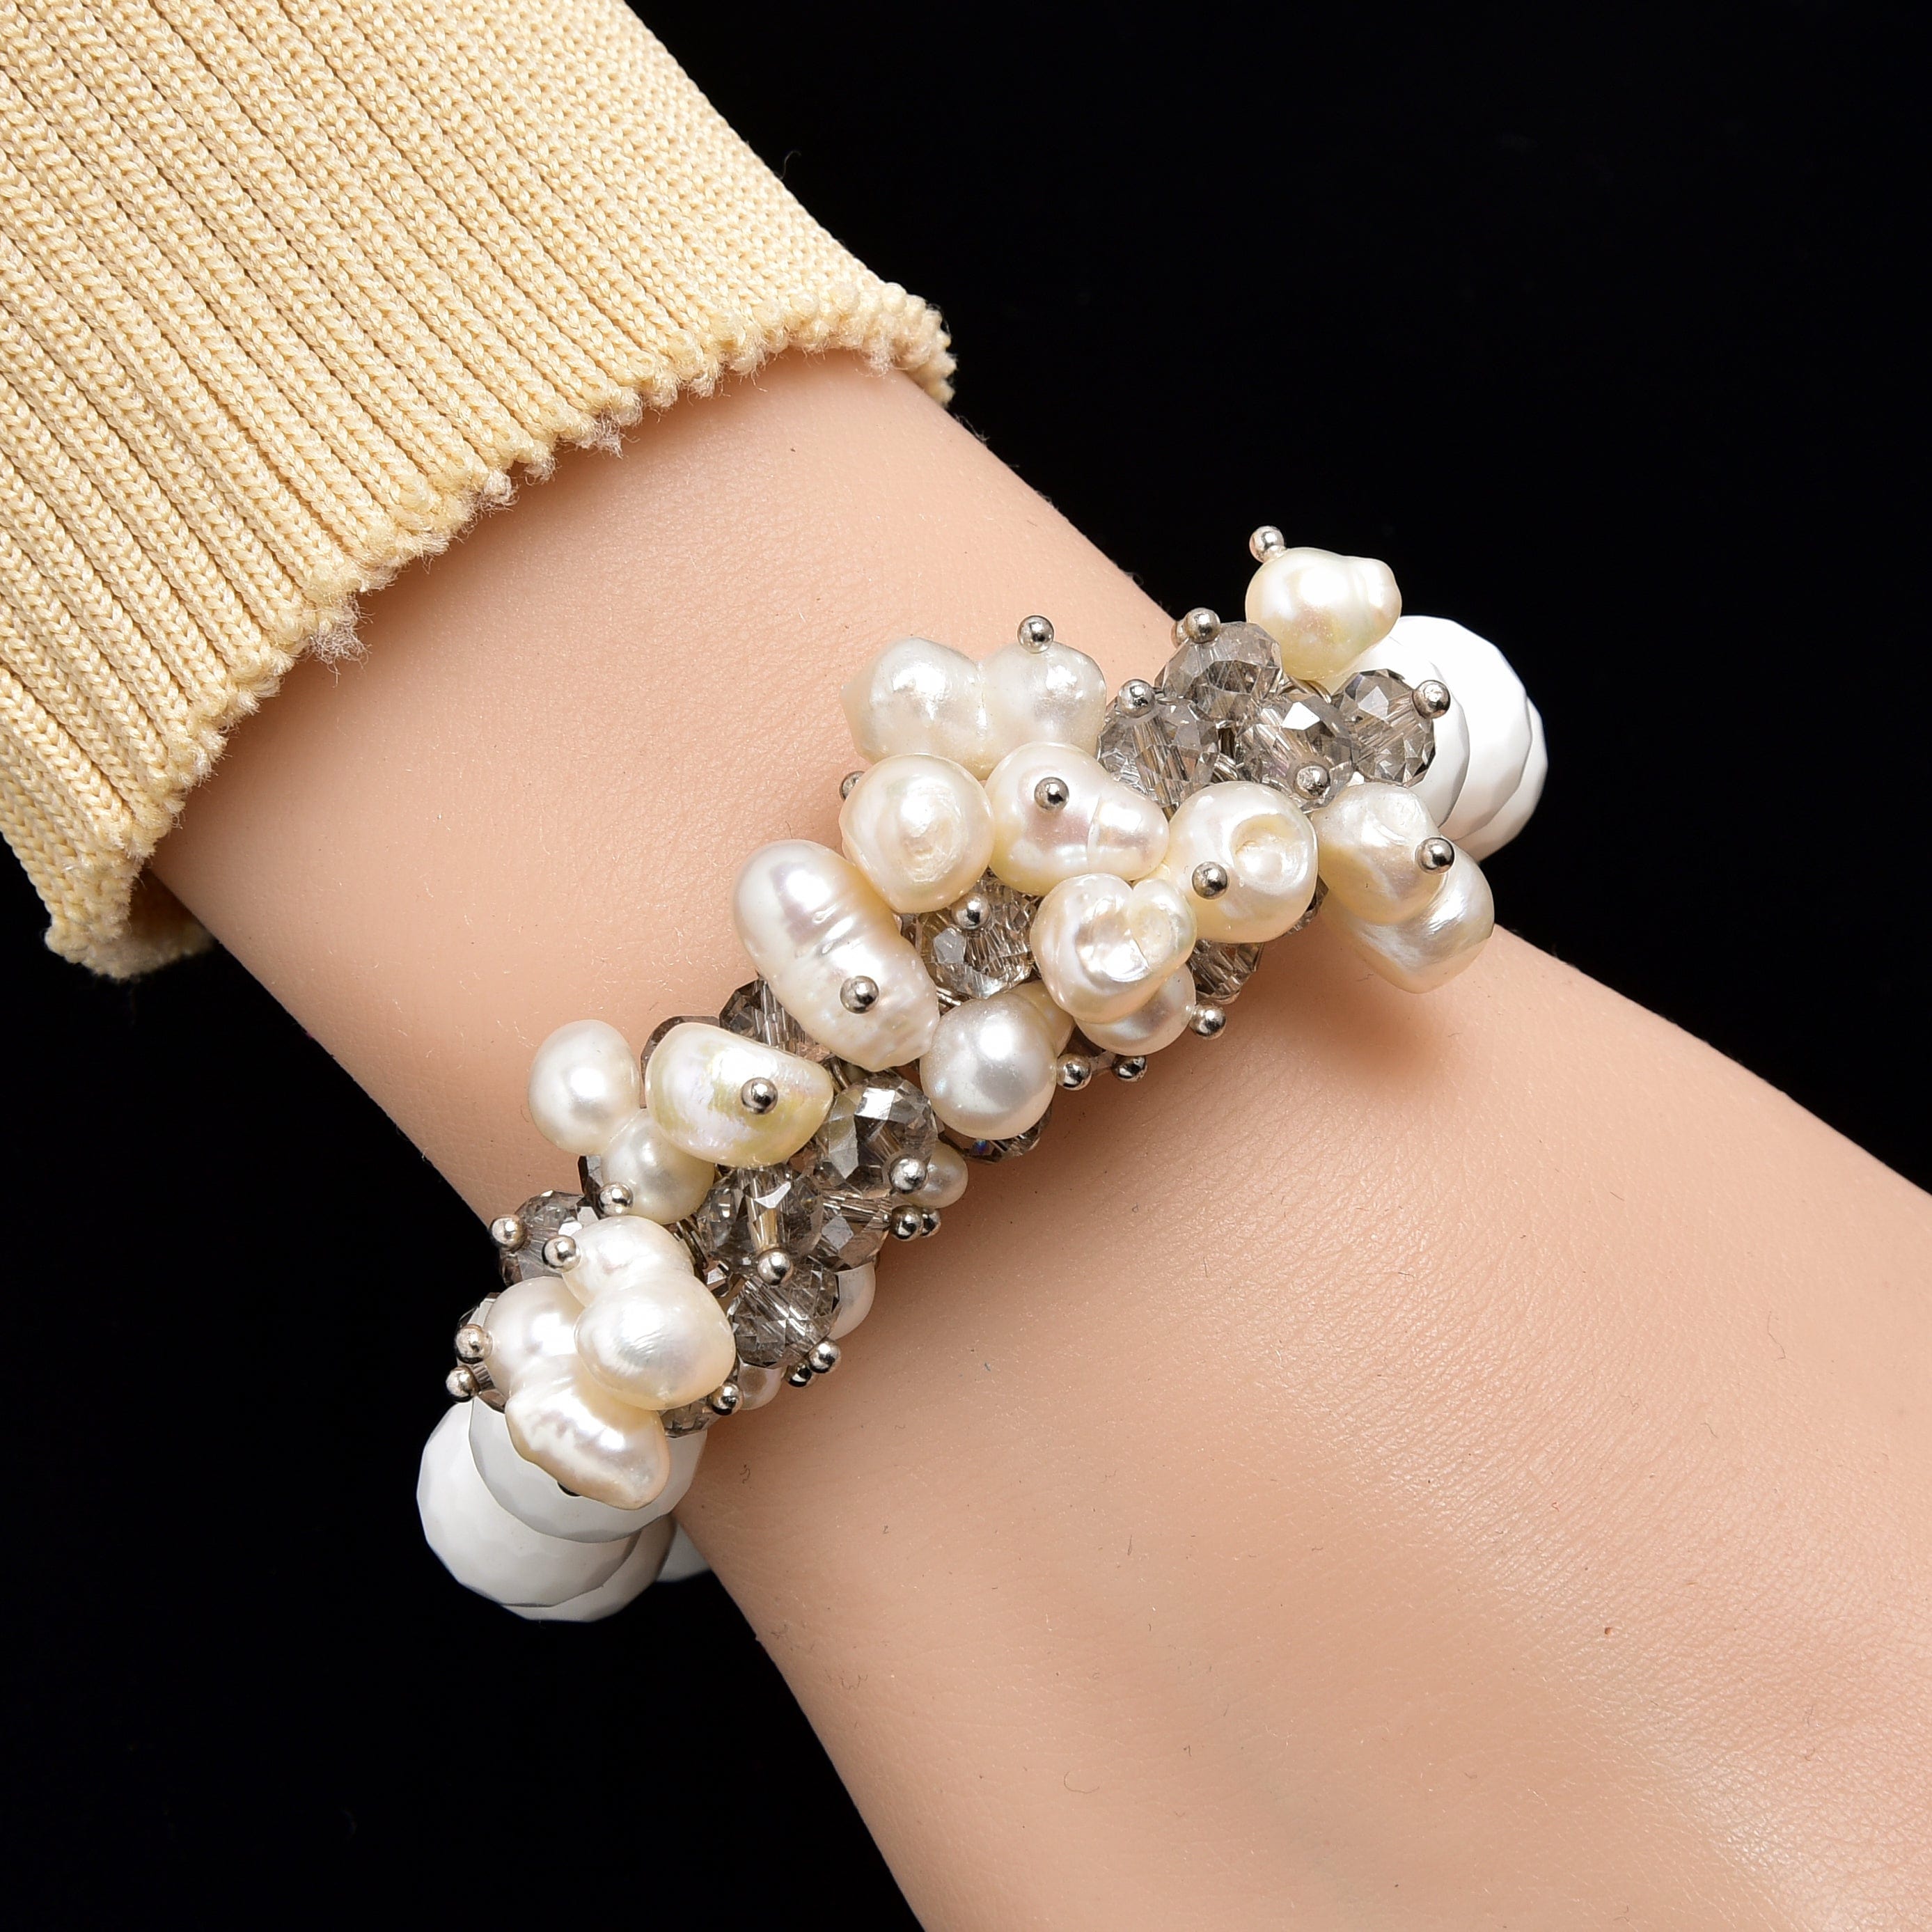 Can everyone wear a pearl gemstone? - Quora